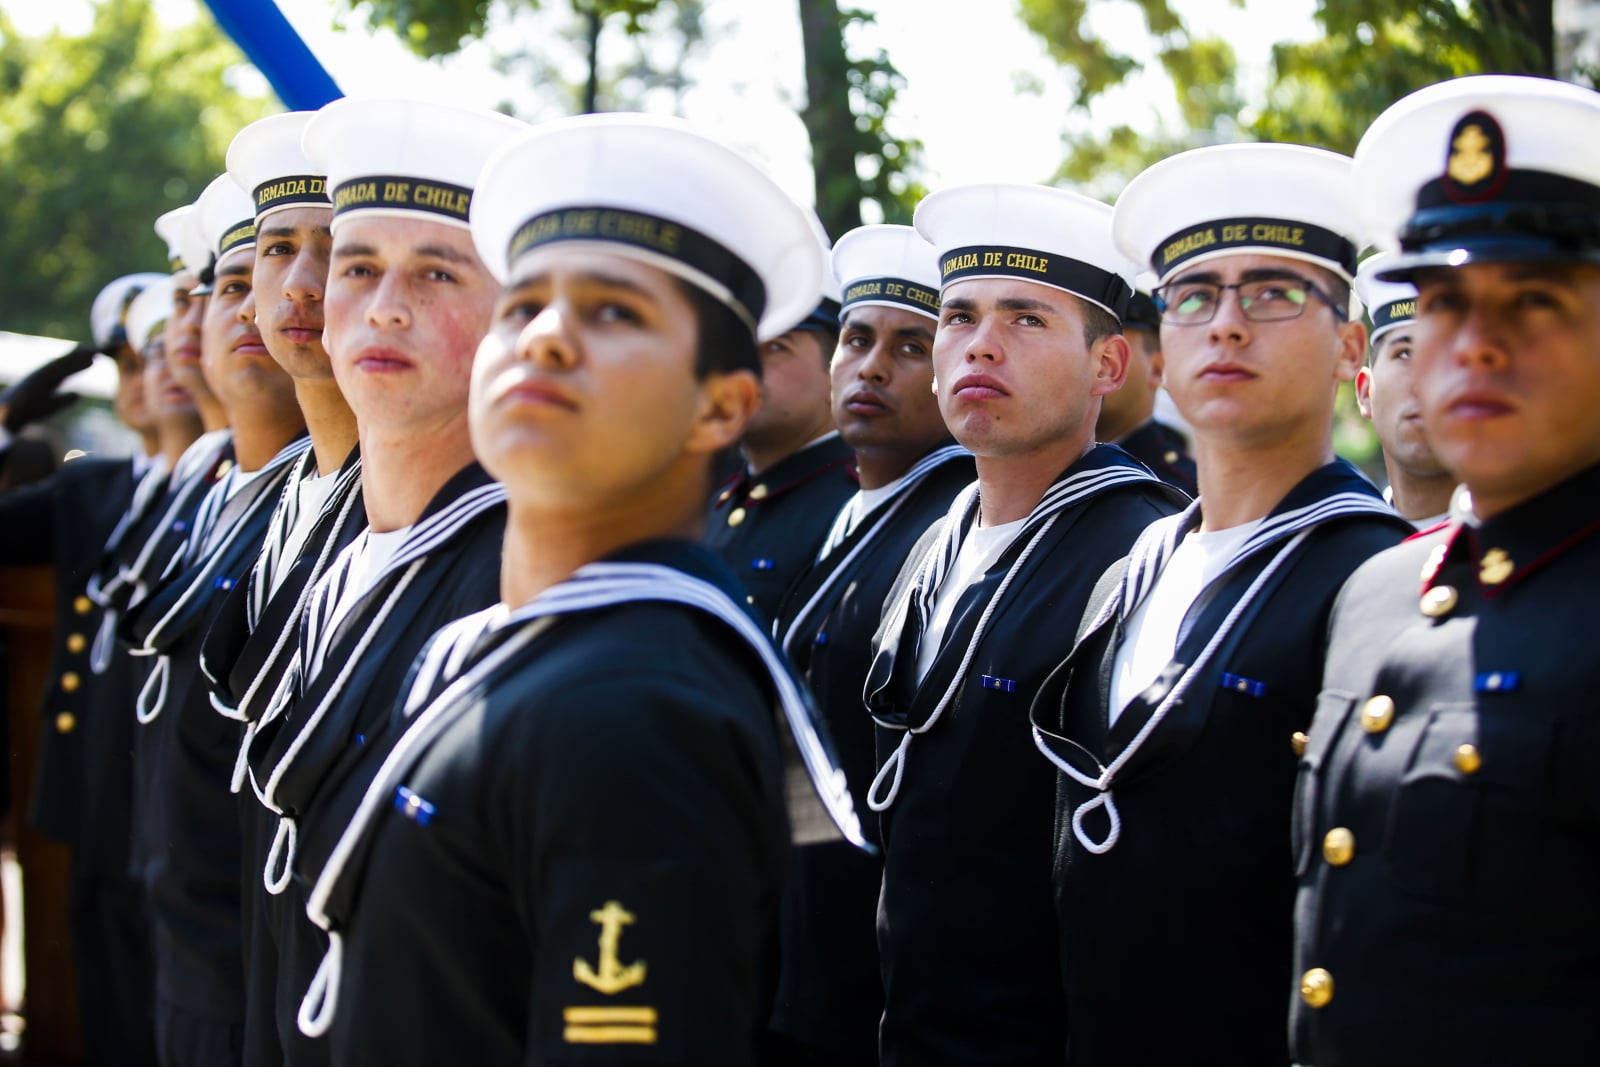 Królewska Marynarka Wojenna w Chile fot. EPA/Alberto Peña 
